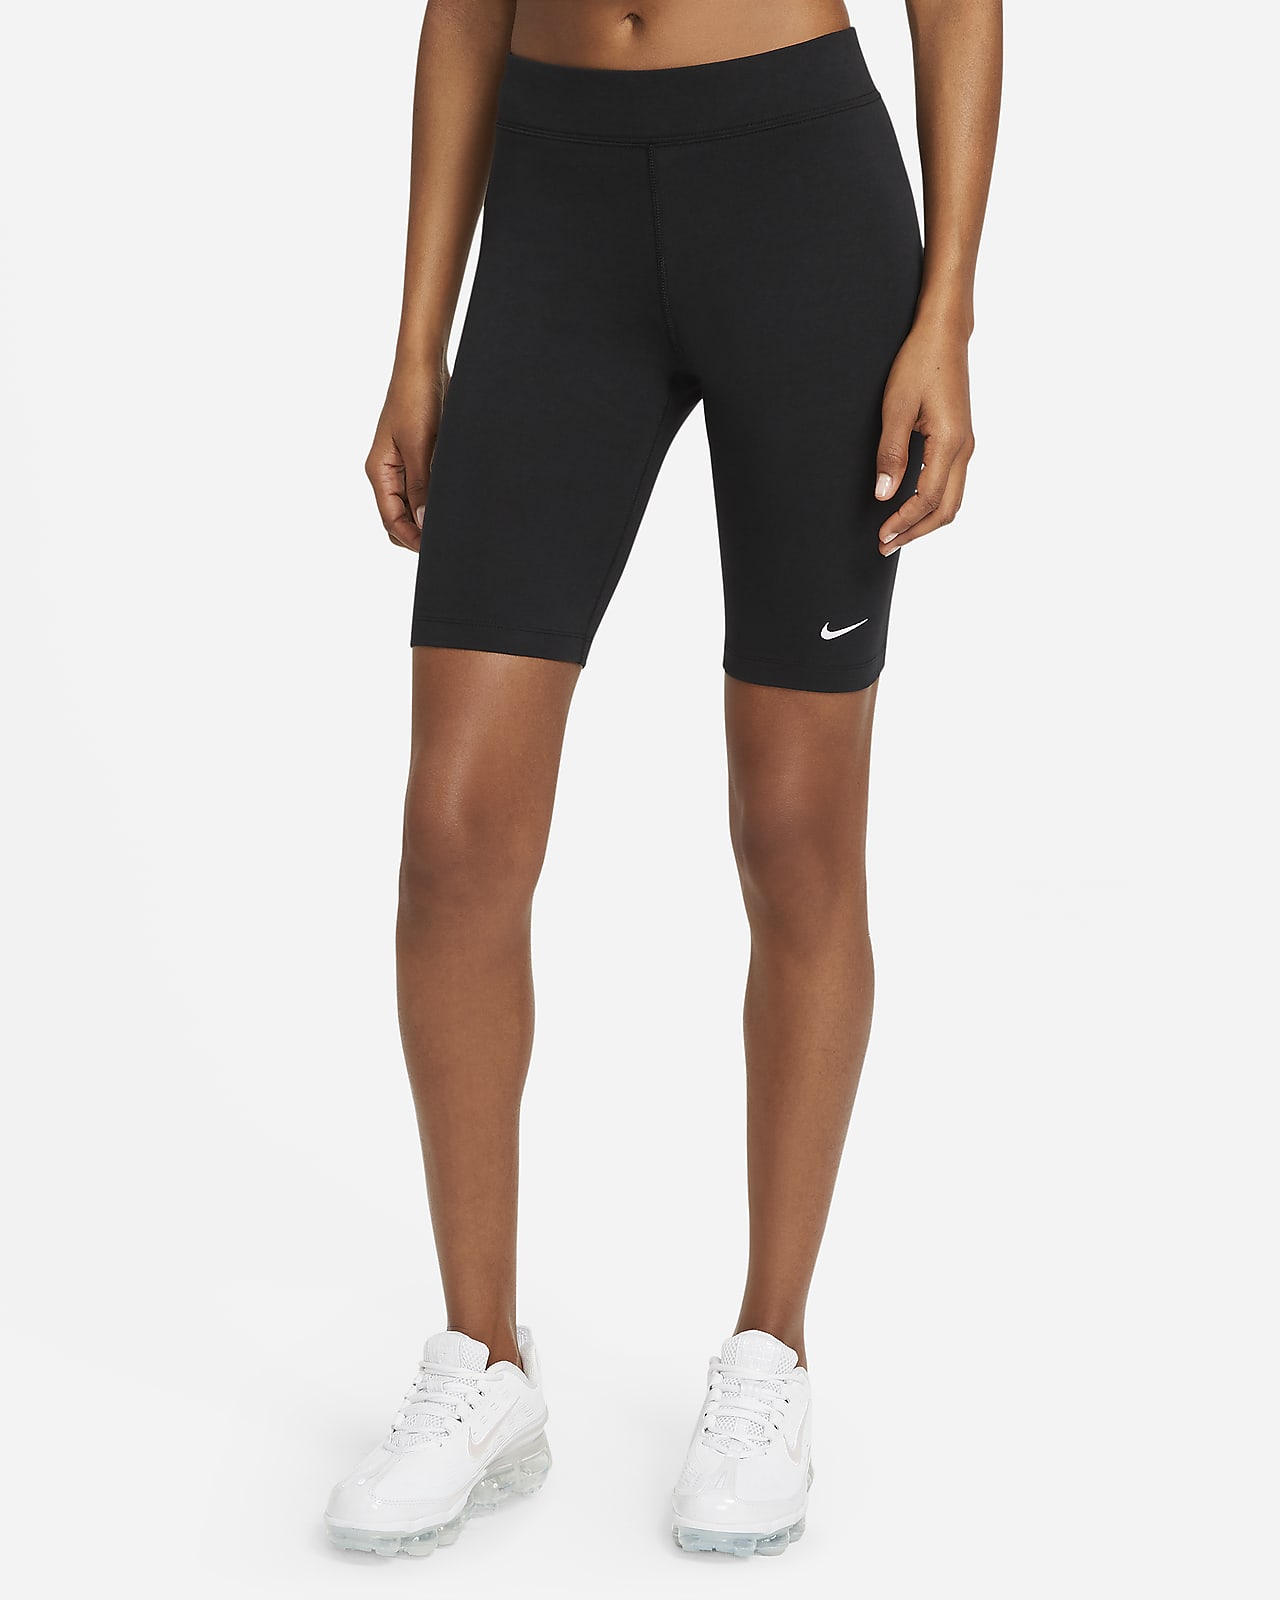 Cycliste taille mi-basse Nike Sportswear Essential pour femme